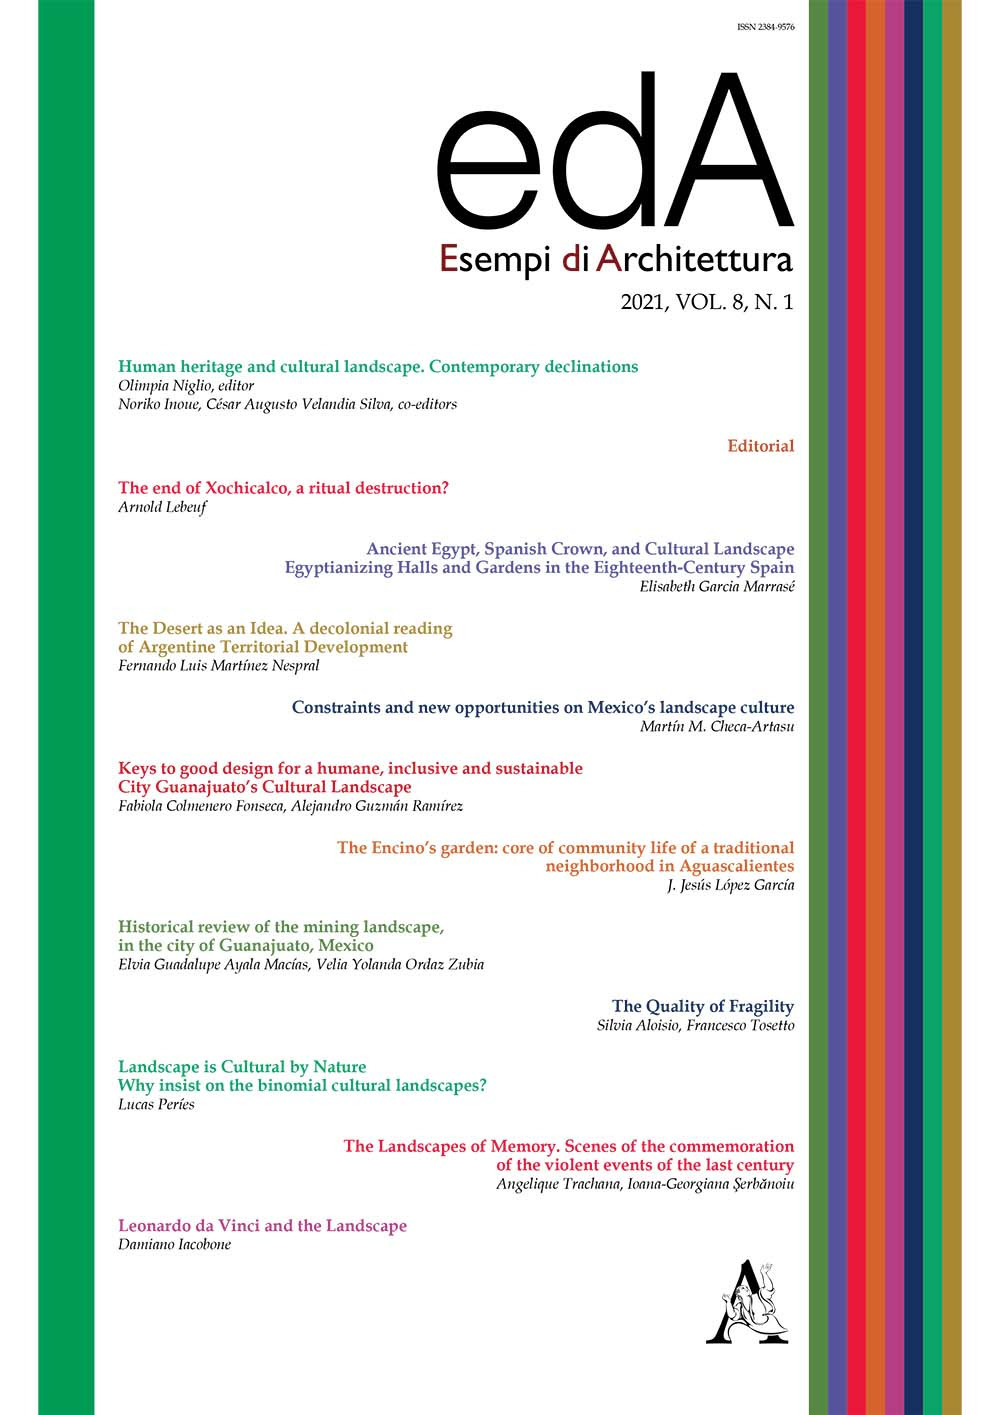 EDA. Esempi di architettura 2021. International journal of architecture and engineering. Vol. 8/1